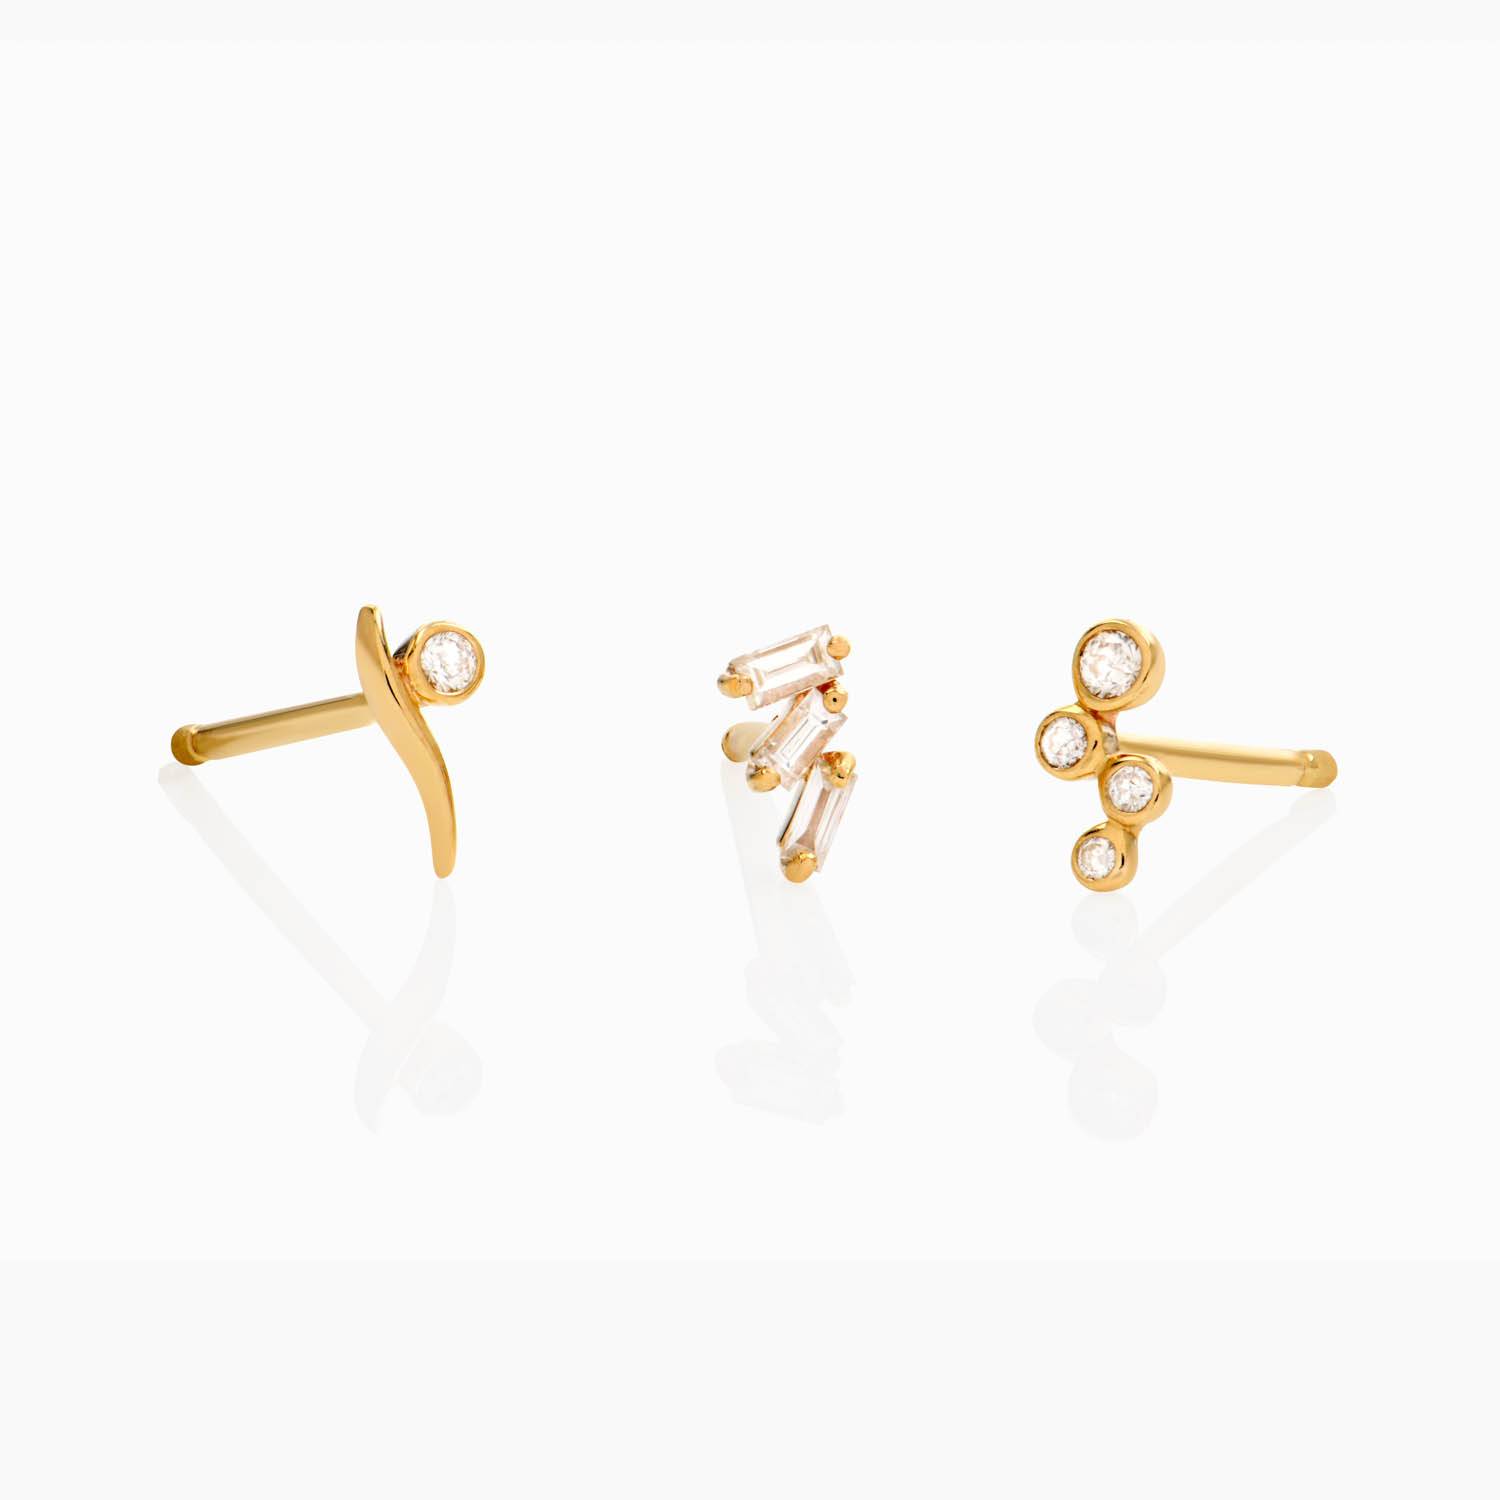 Triple Stud Earrings Set- 14K Solid Gold product photo